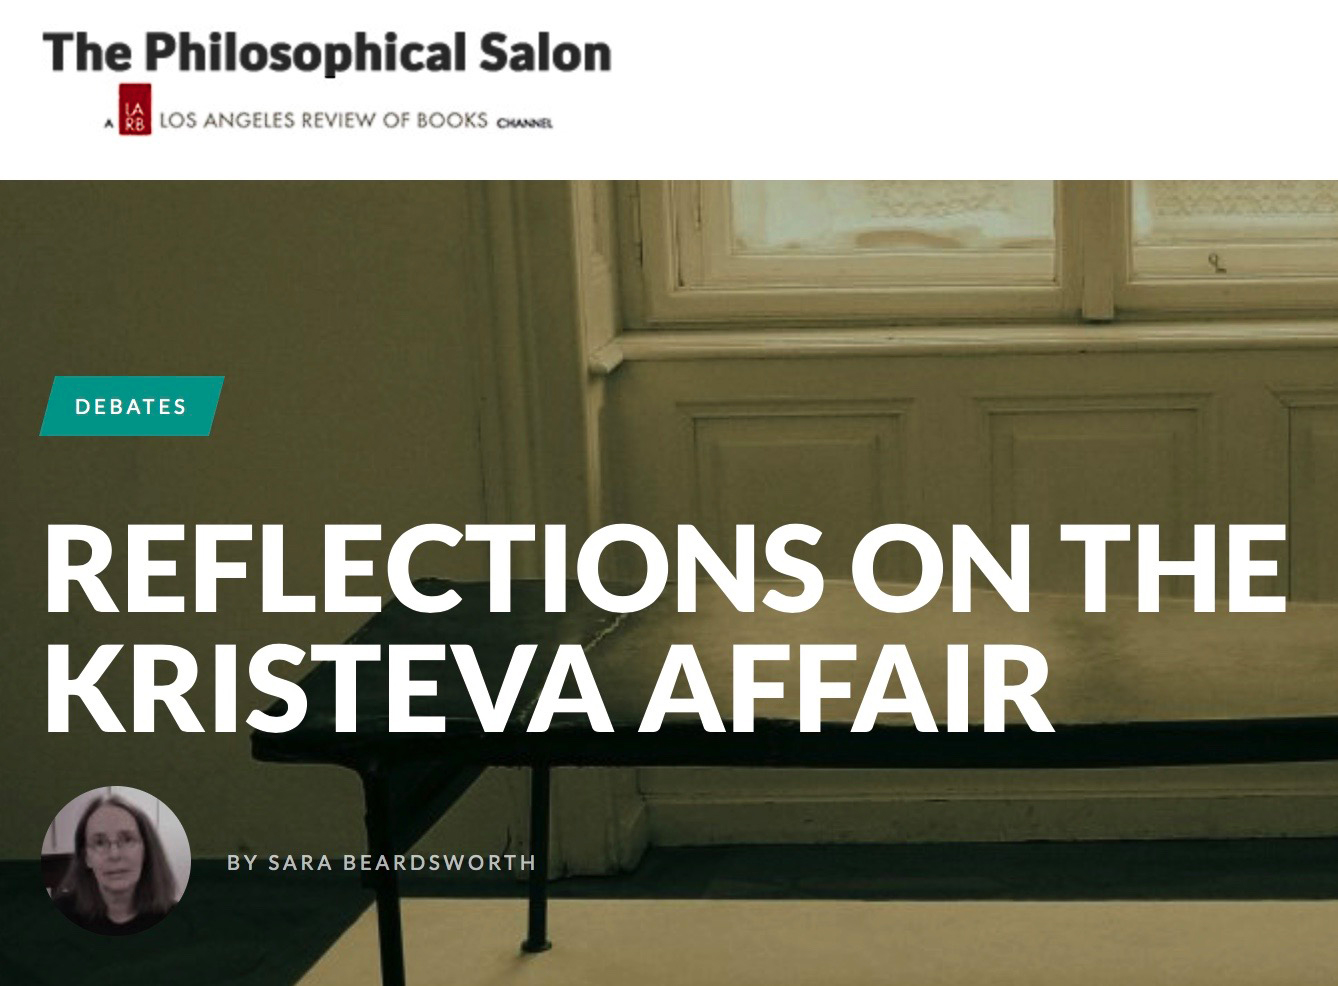 The Philosophical Salon